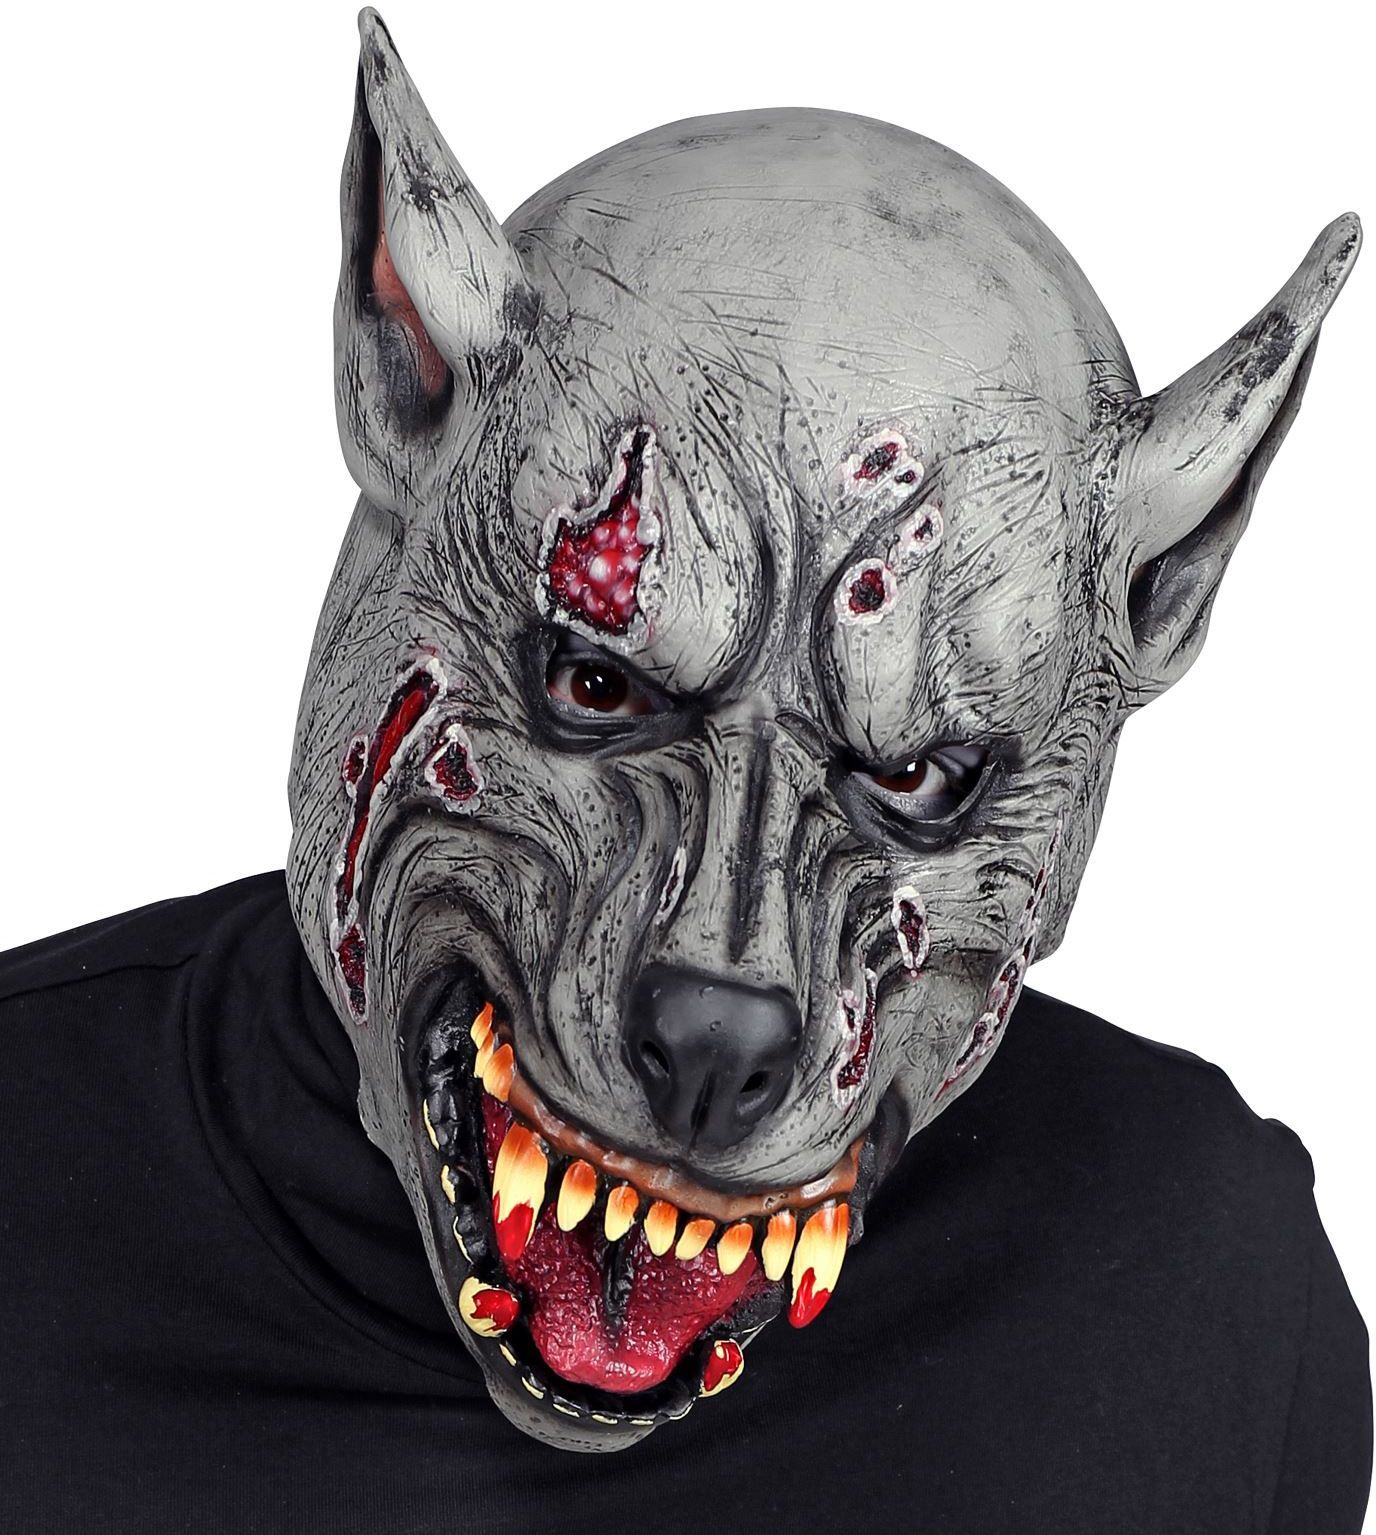 Weerwolf Halloween Masker